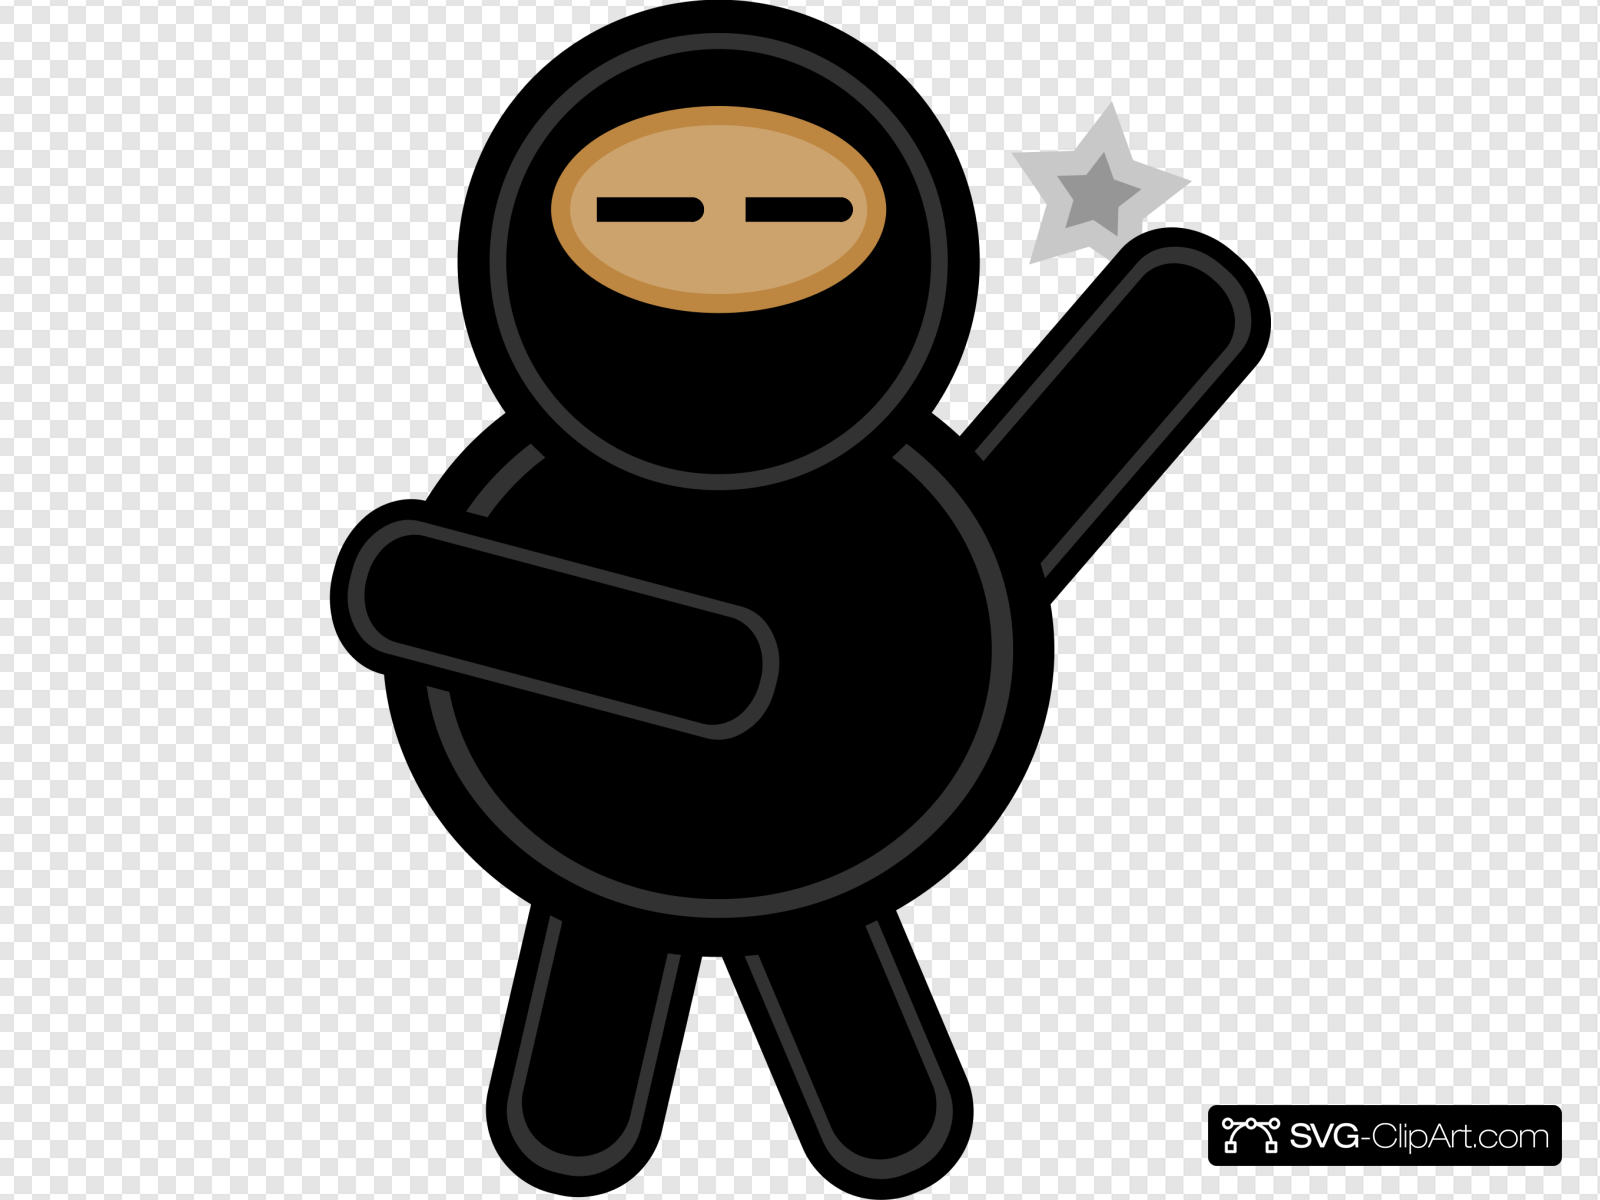 Plump Ninja Clip art, Icon and SVG